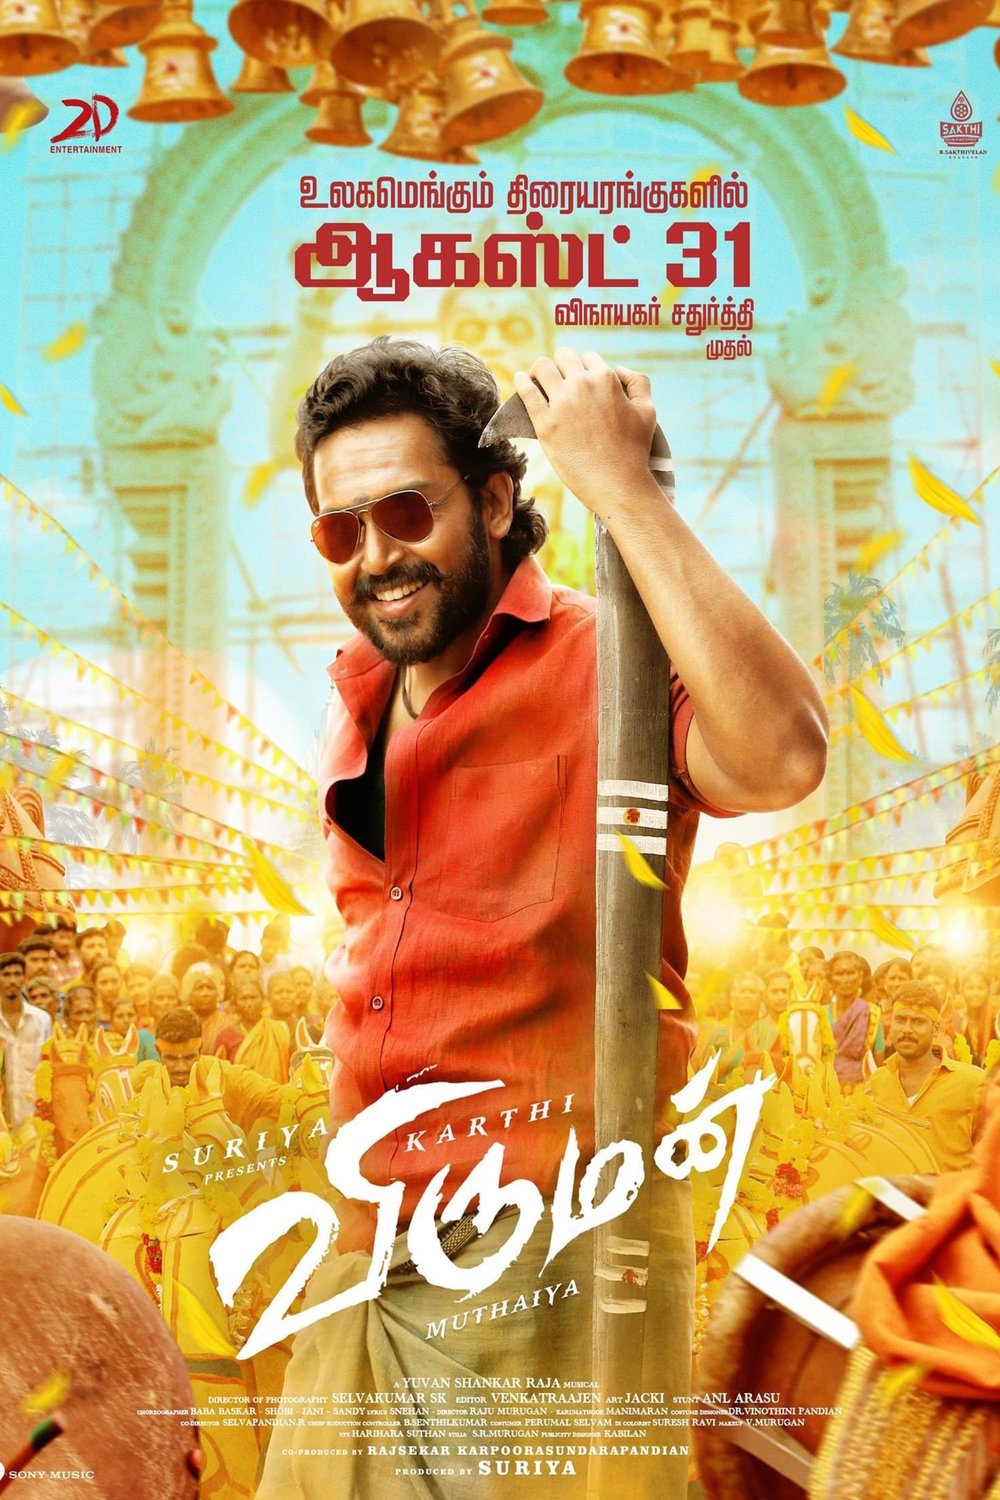 Tamil poster of the movie Viruman